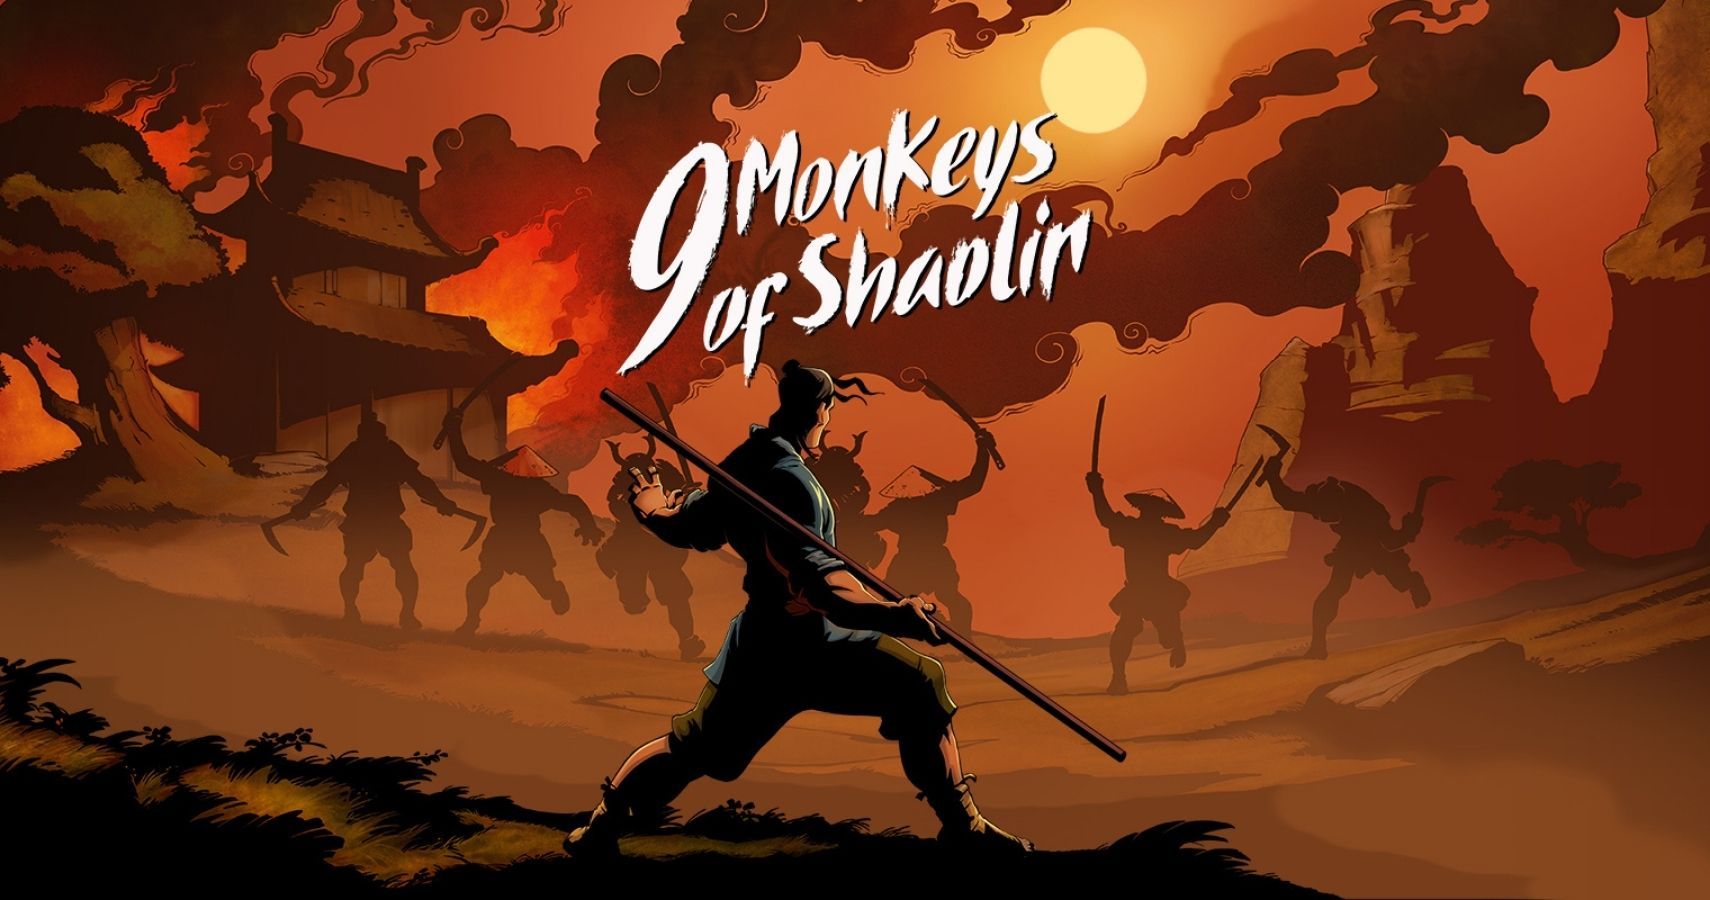 9 Monkeys of Shaolin Hardcore Game Mode update feature image